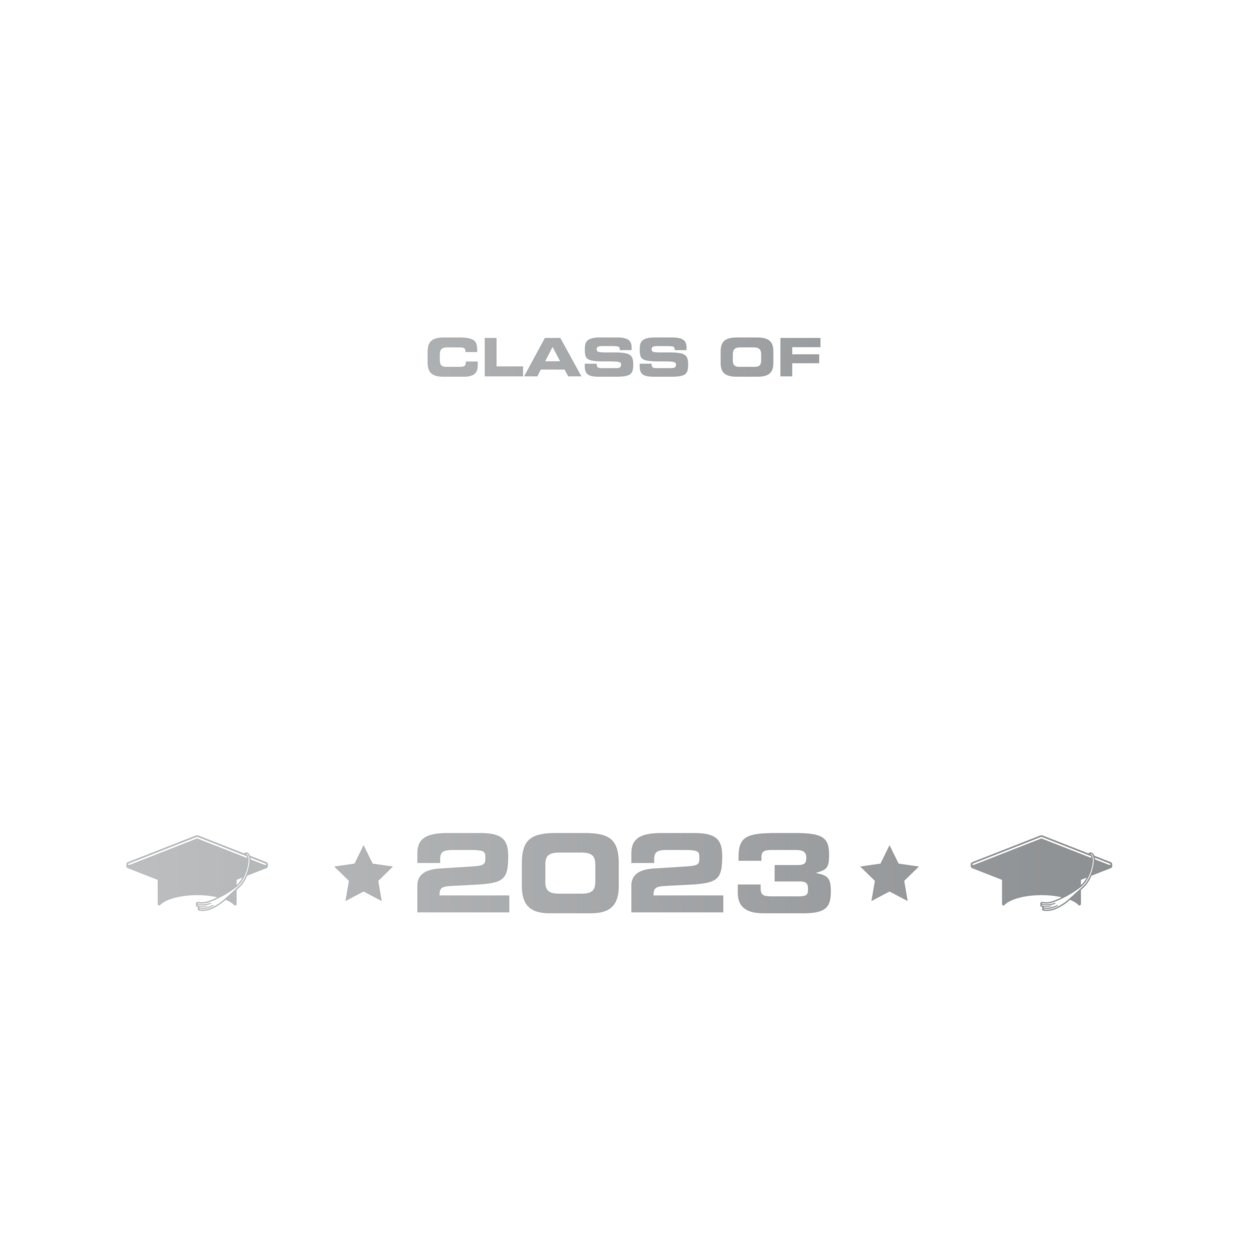 Class Of 2023 Senior Graduation License Plate Frame - Black, Etched